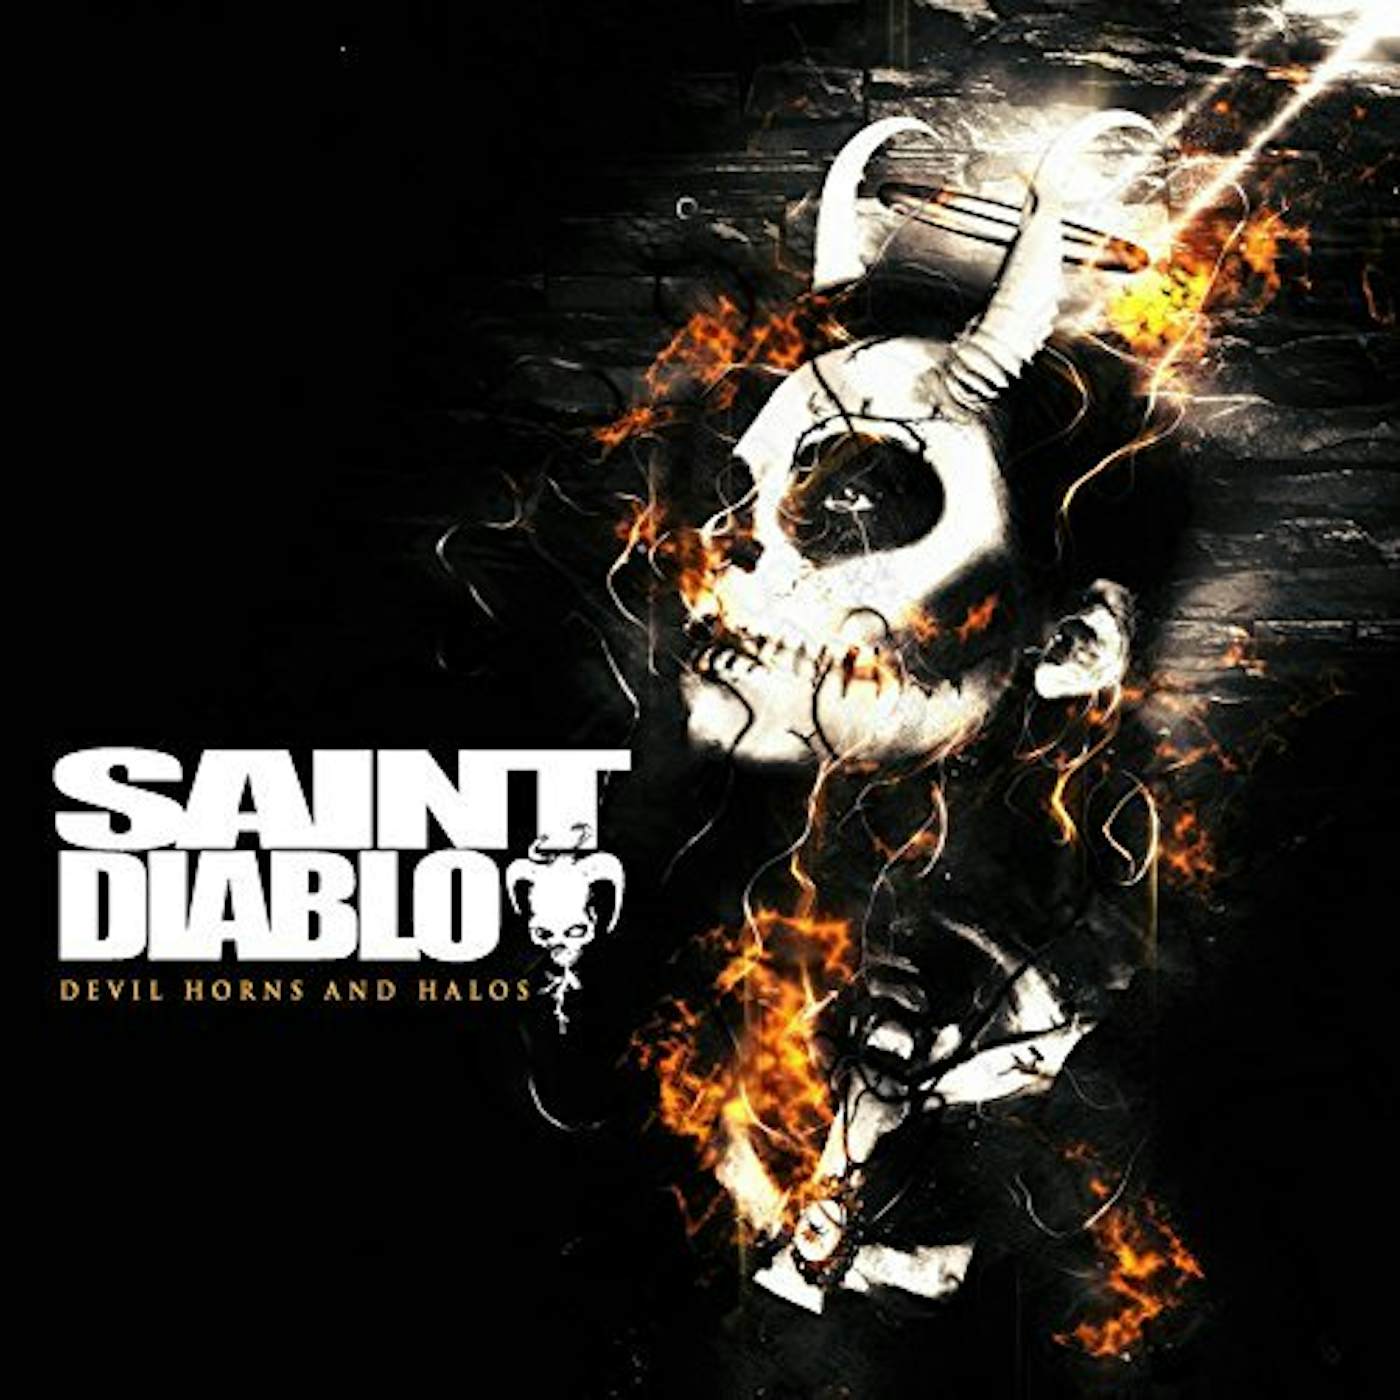 Saint Diablo DEVIL HORNS AND HALOS CD